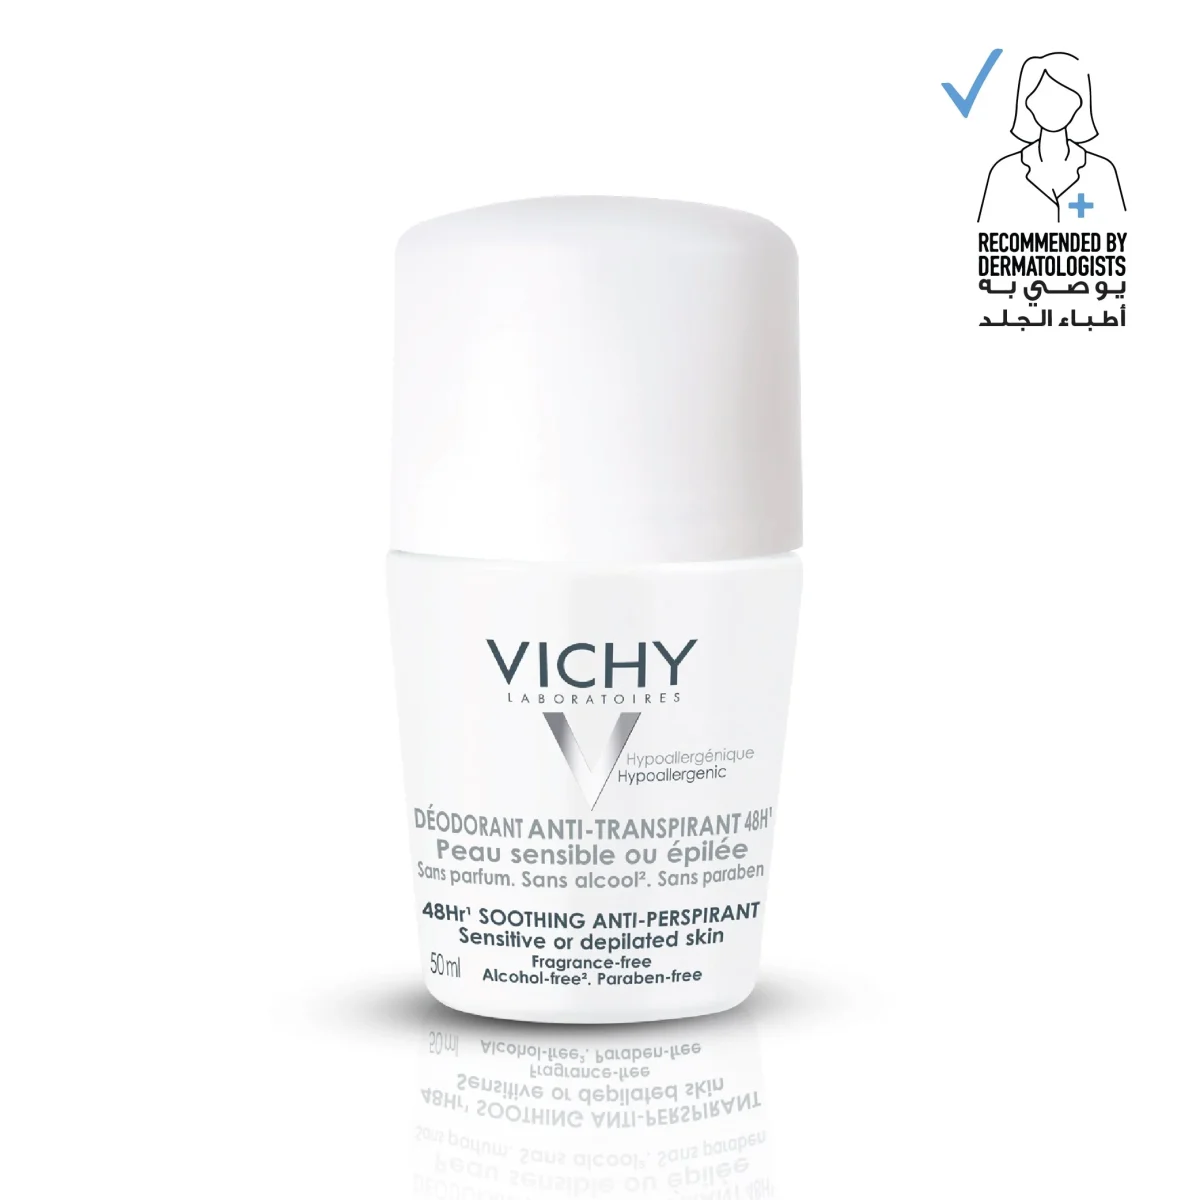 Vichy 48 Hours Anti Perspirant Deodorant for Sensitive Skin 50ml at skinperfection